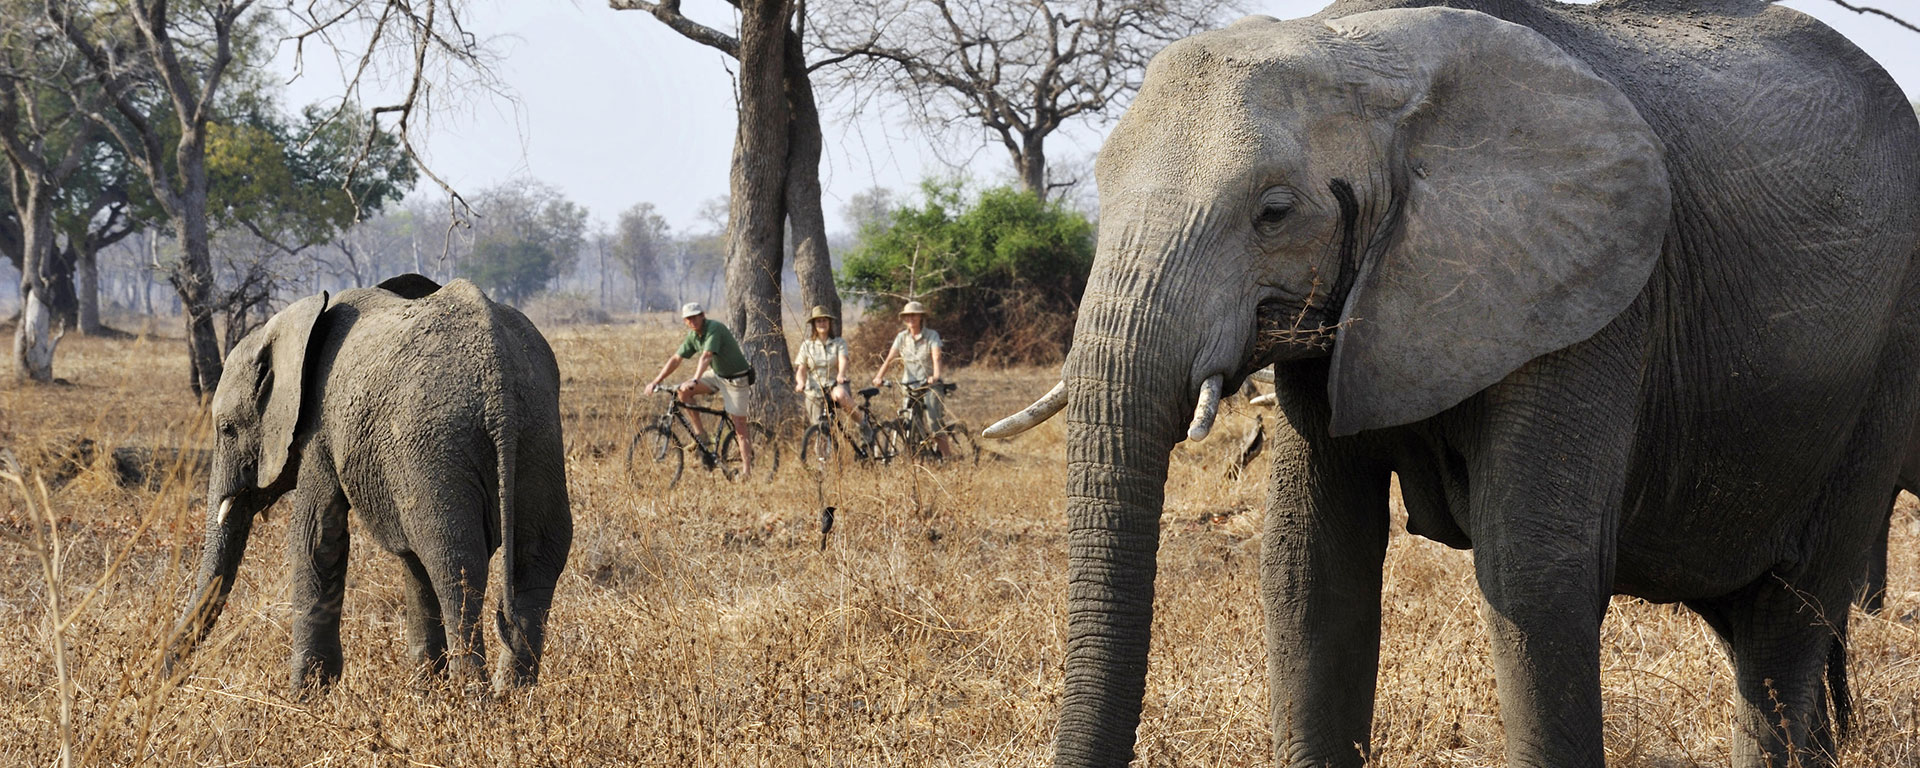 tafika-camp-zambia-south-luangwa-cycling-safari-elephants-banner